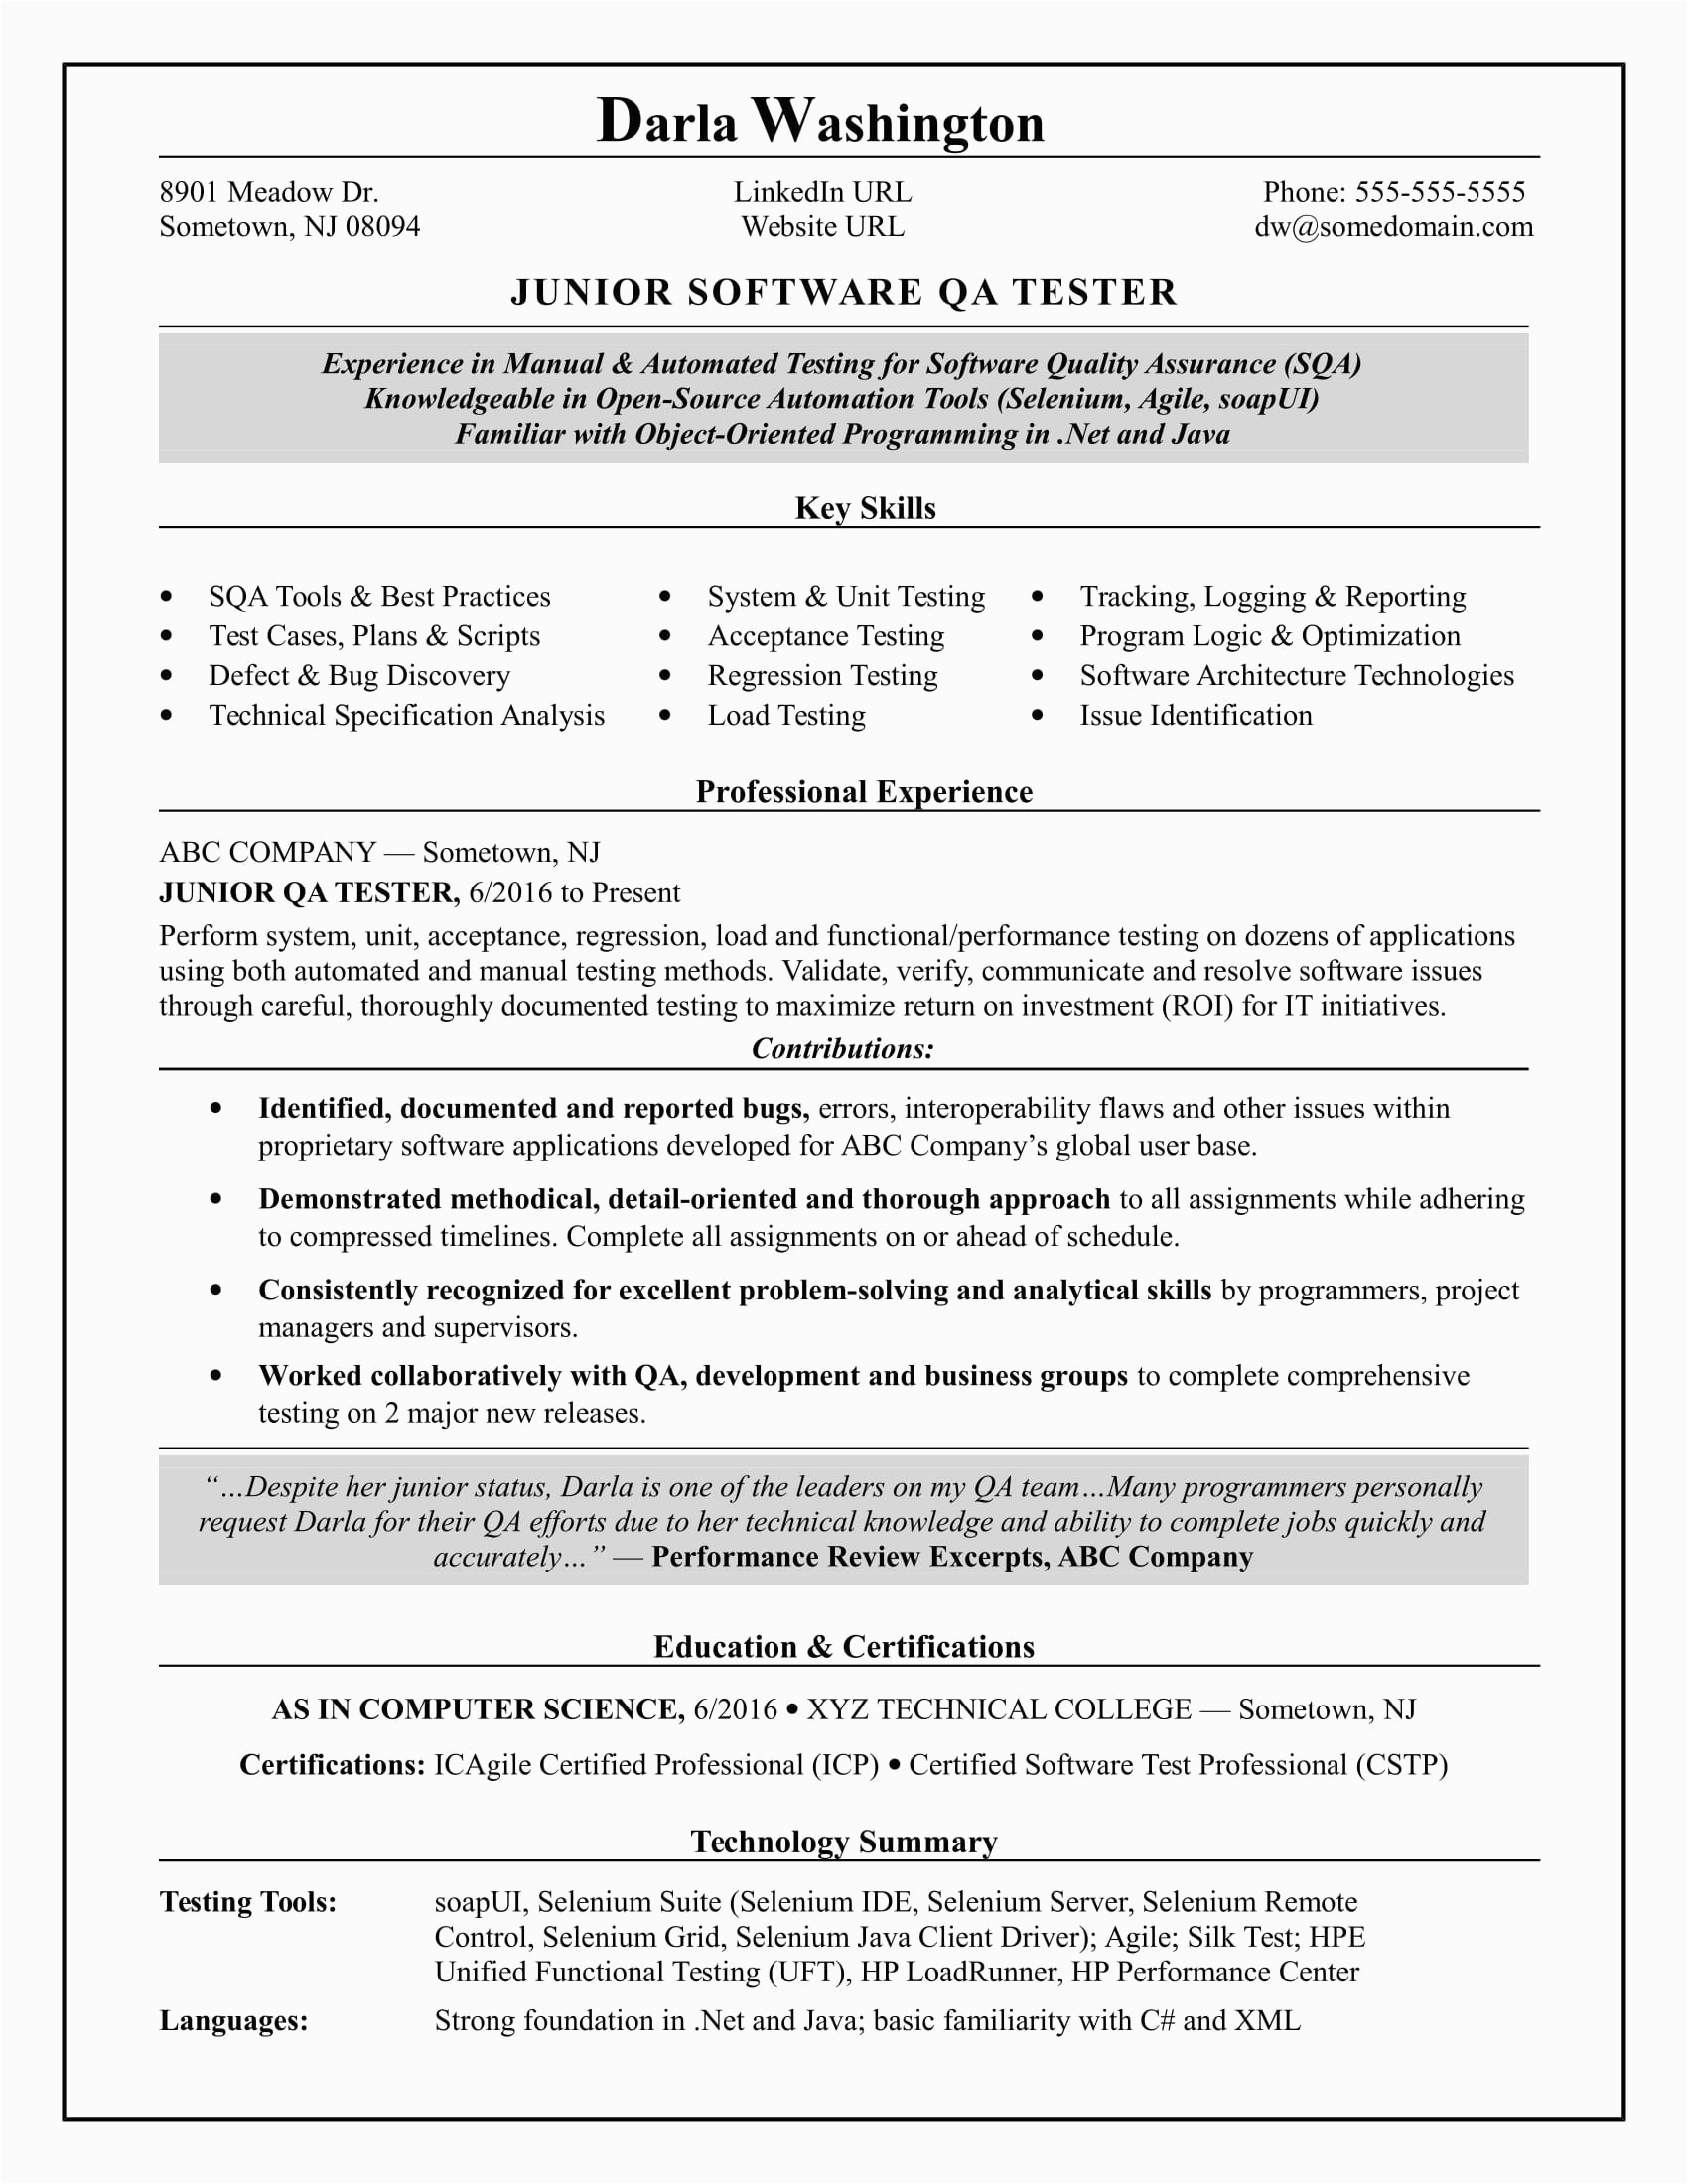 Software Tester Resume Sample Entry Level Entry Level software Tester Resume